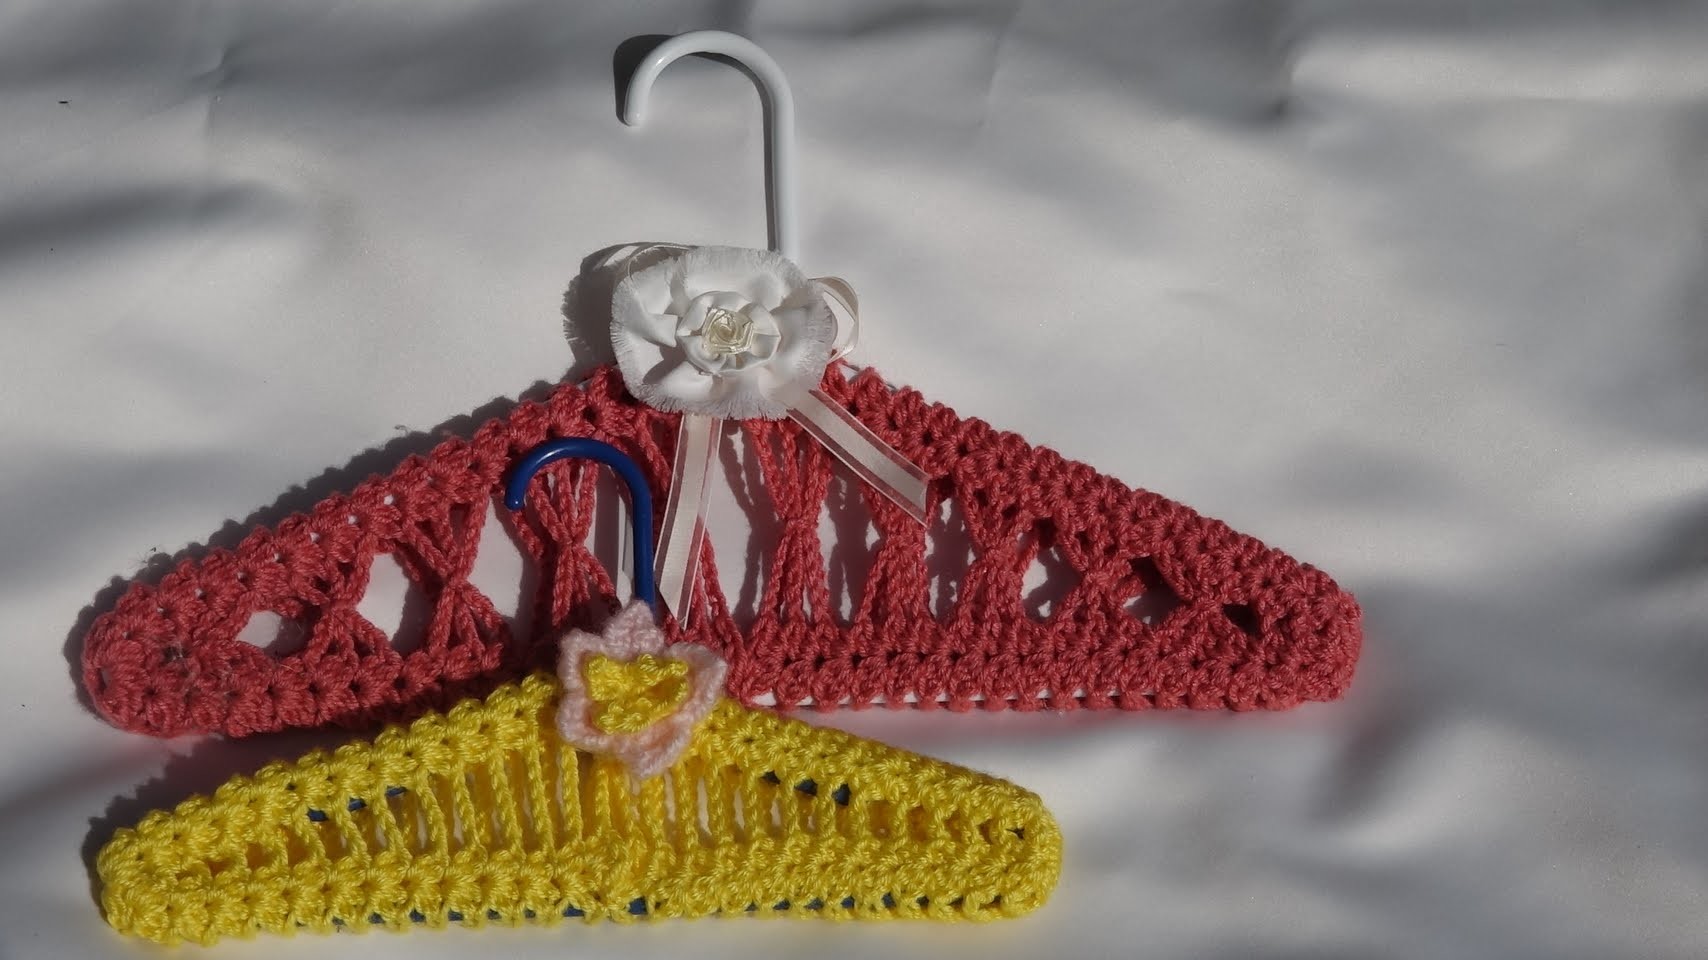 Forros para perchas o ganchos de la ropa tejido a crochet. crochet coat hanger cover